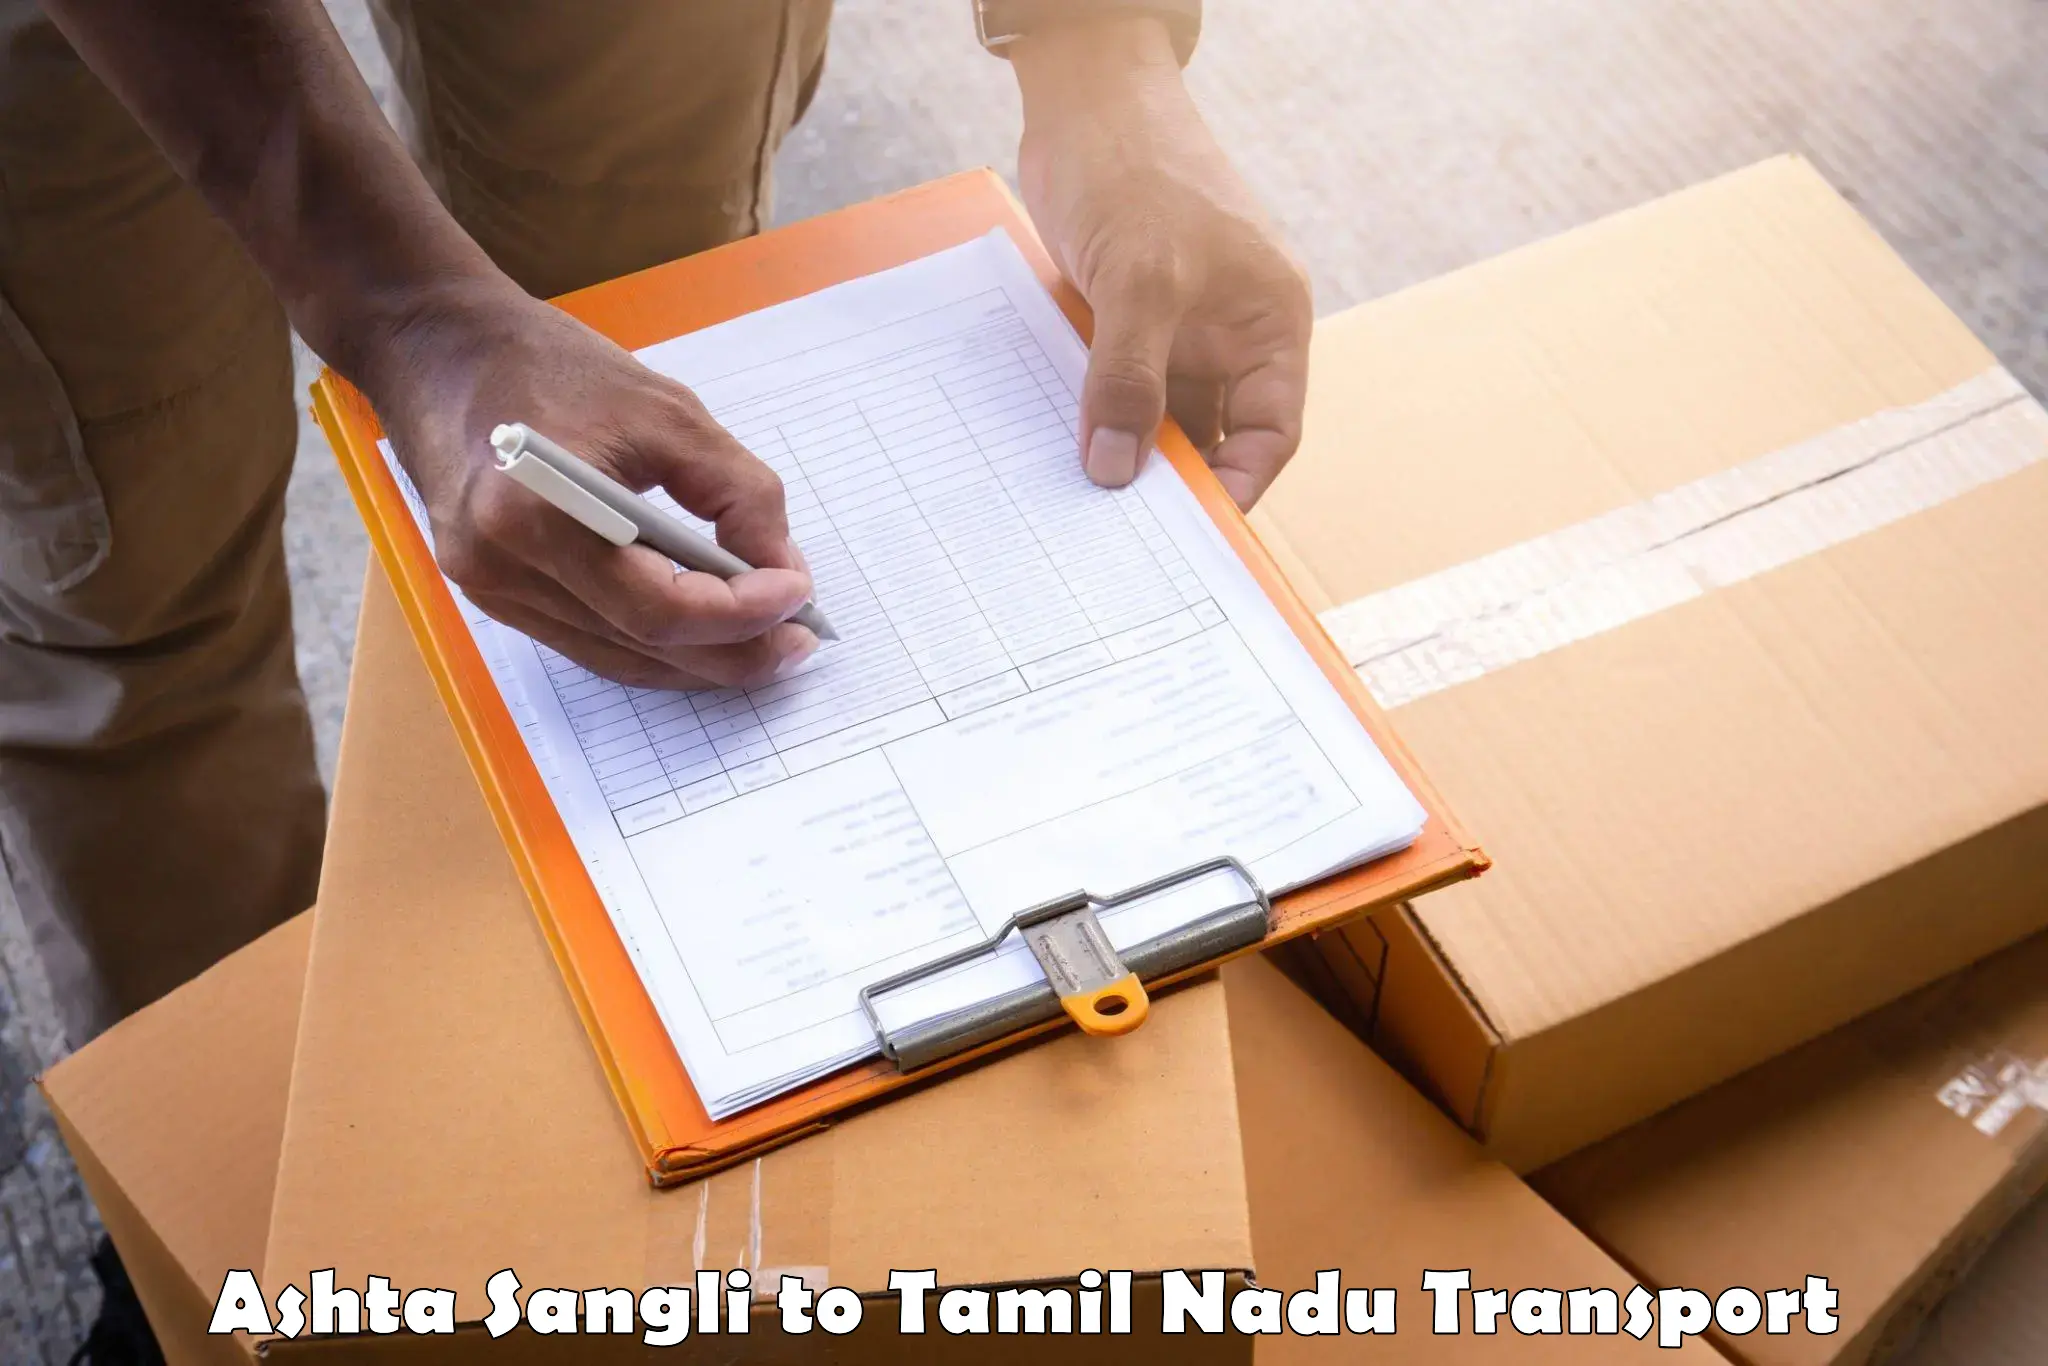 Transport services in Ashta Sangli to Anna University Chennai